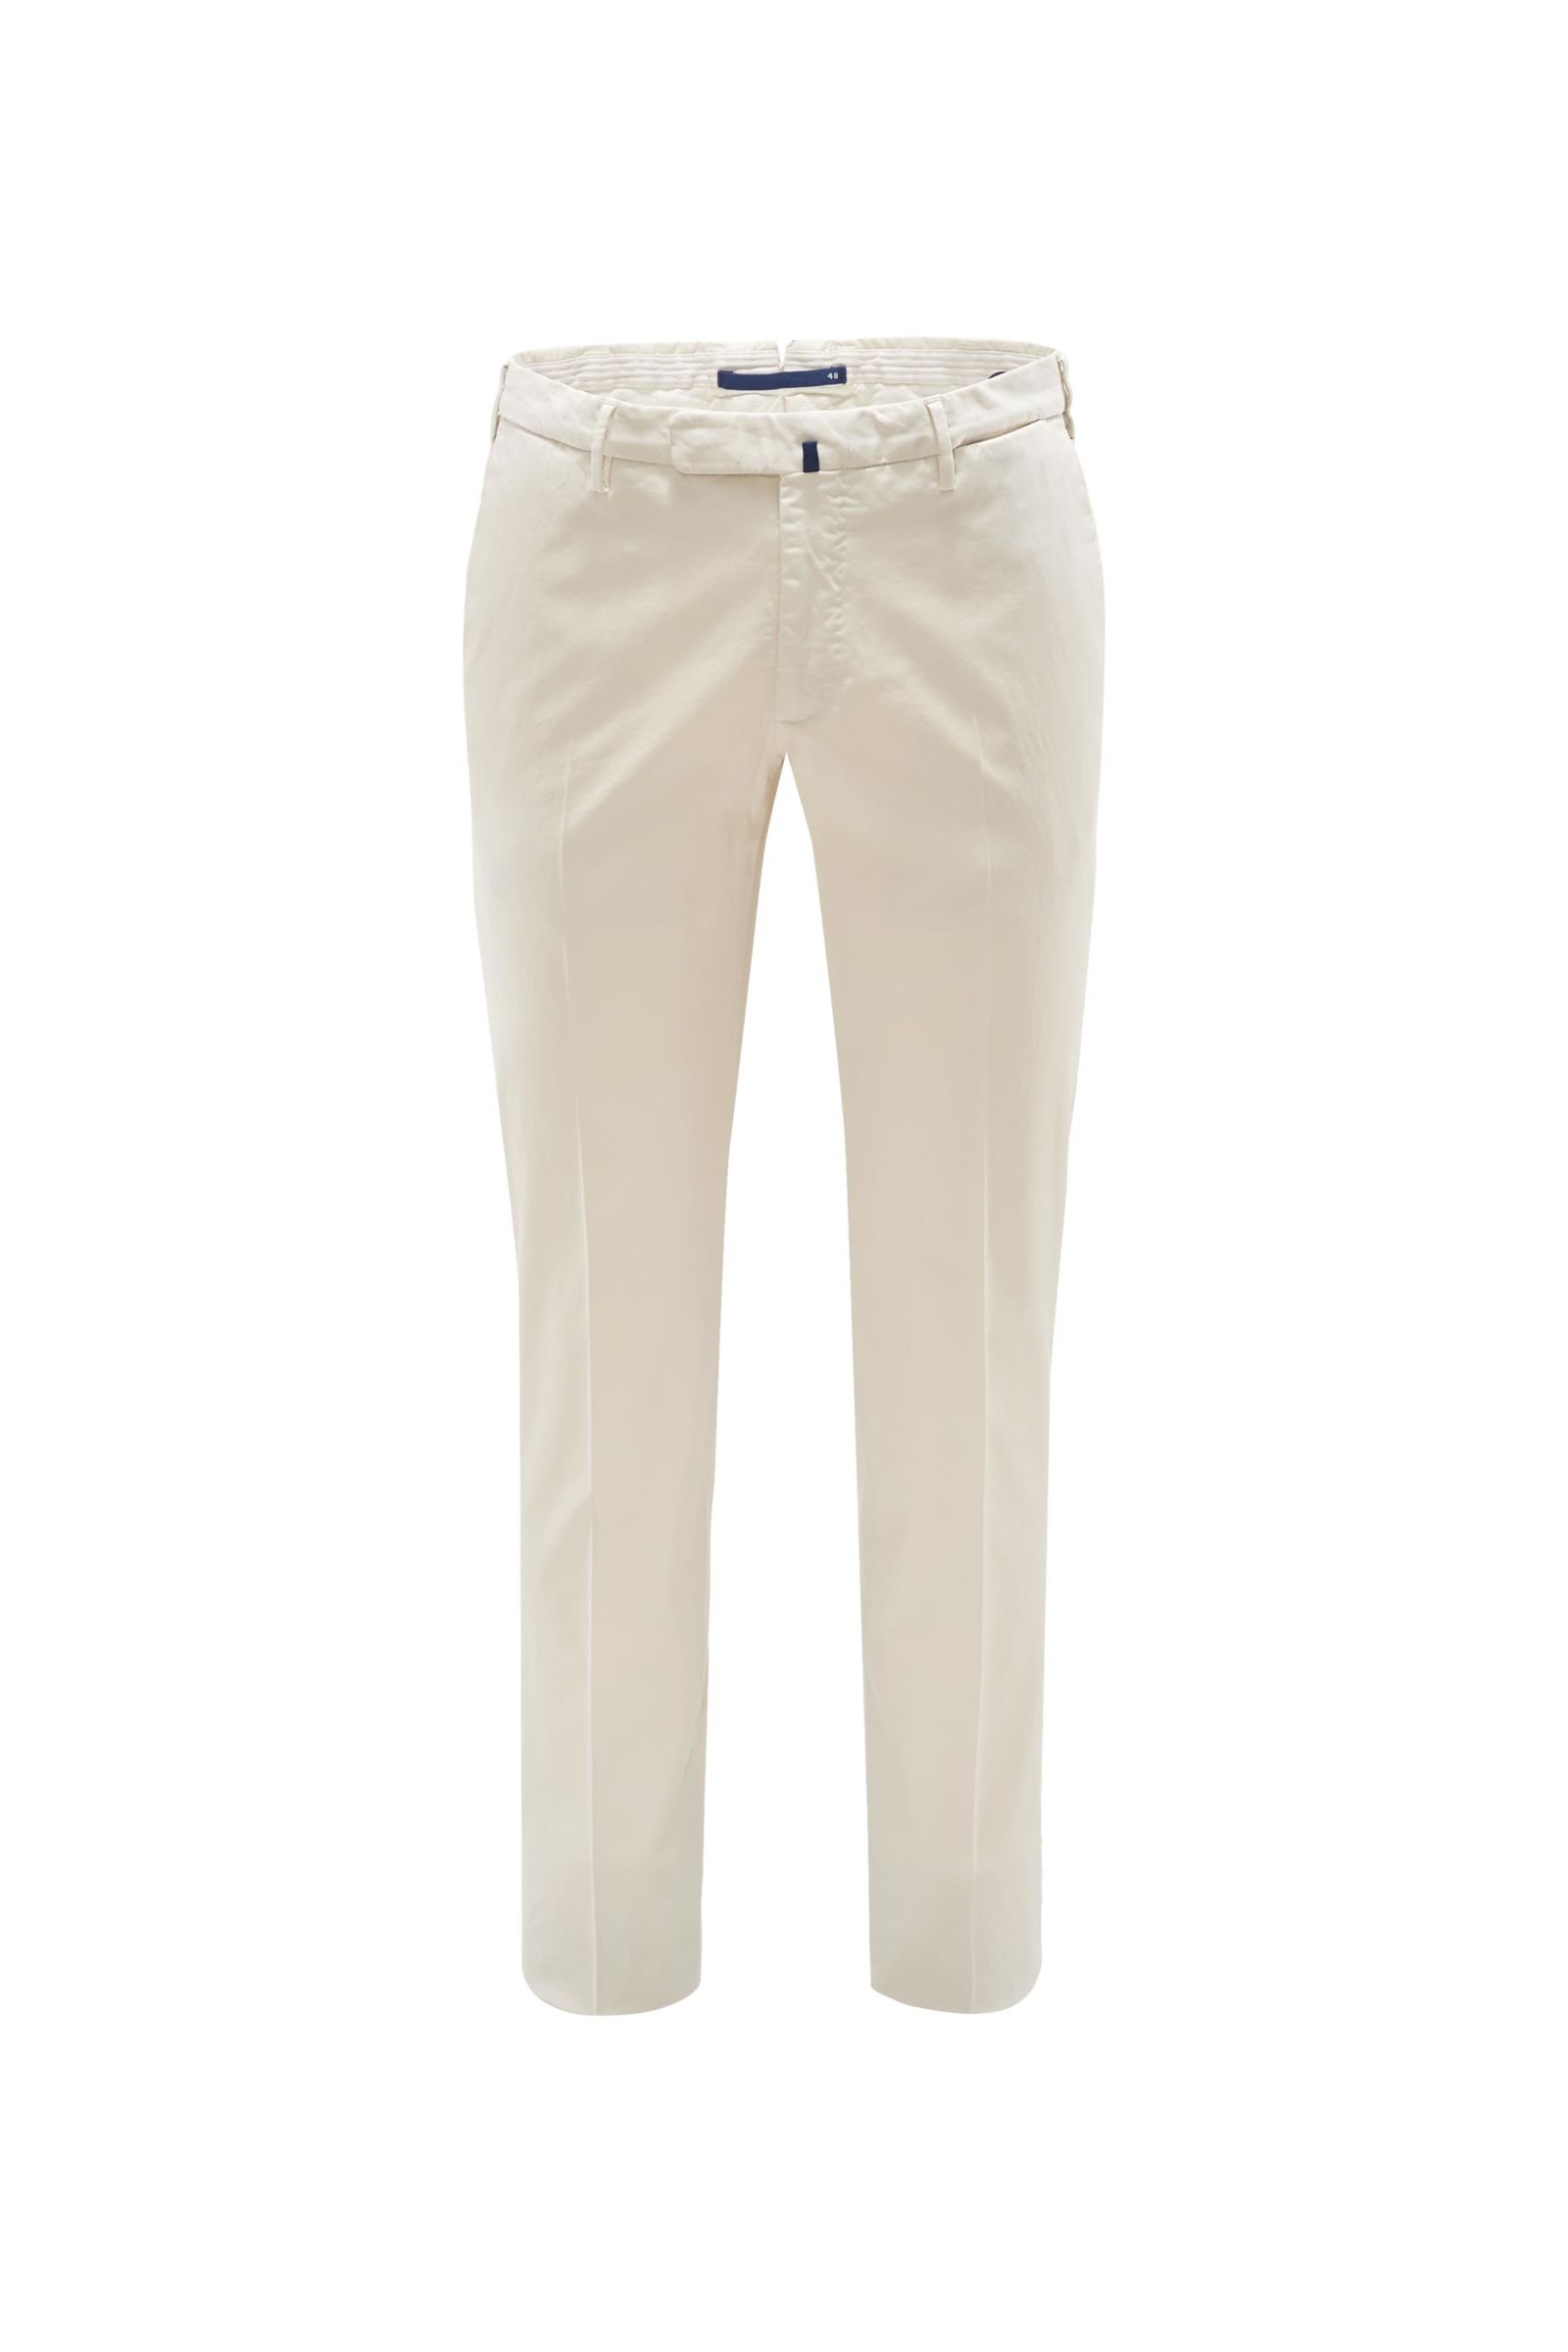 Cotton trousers 'Royal Batavia High Comfort' beige